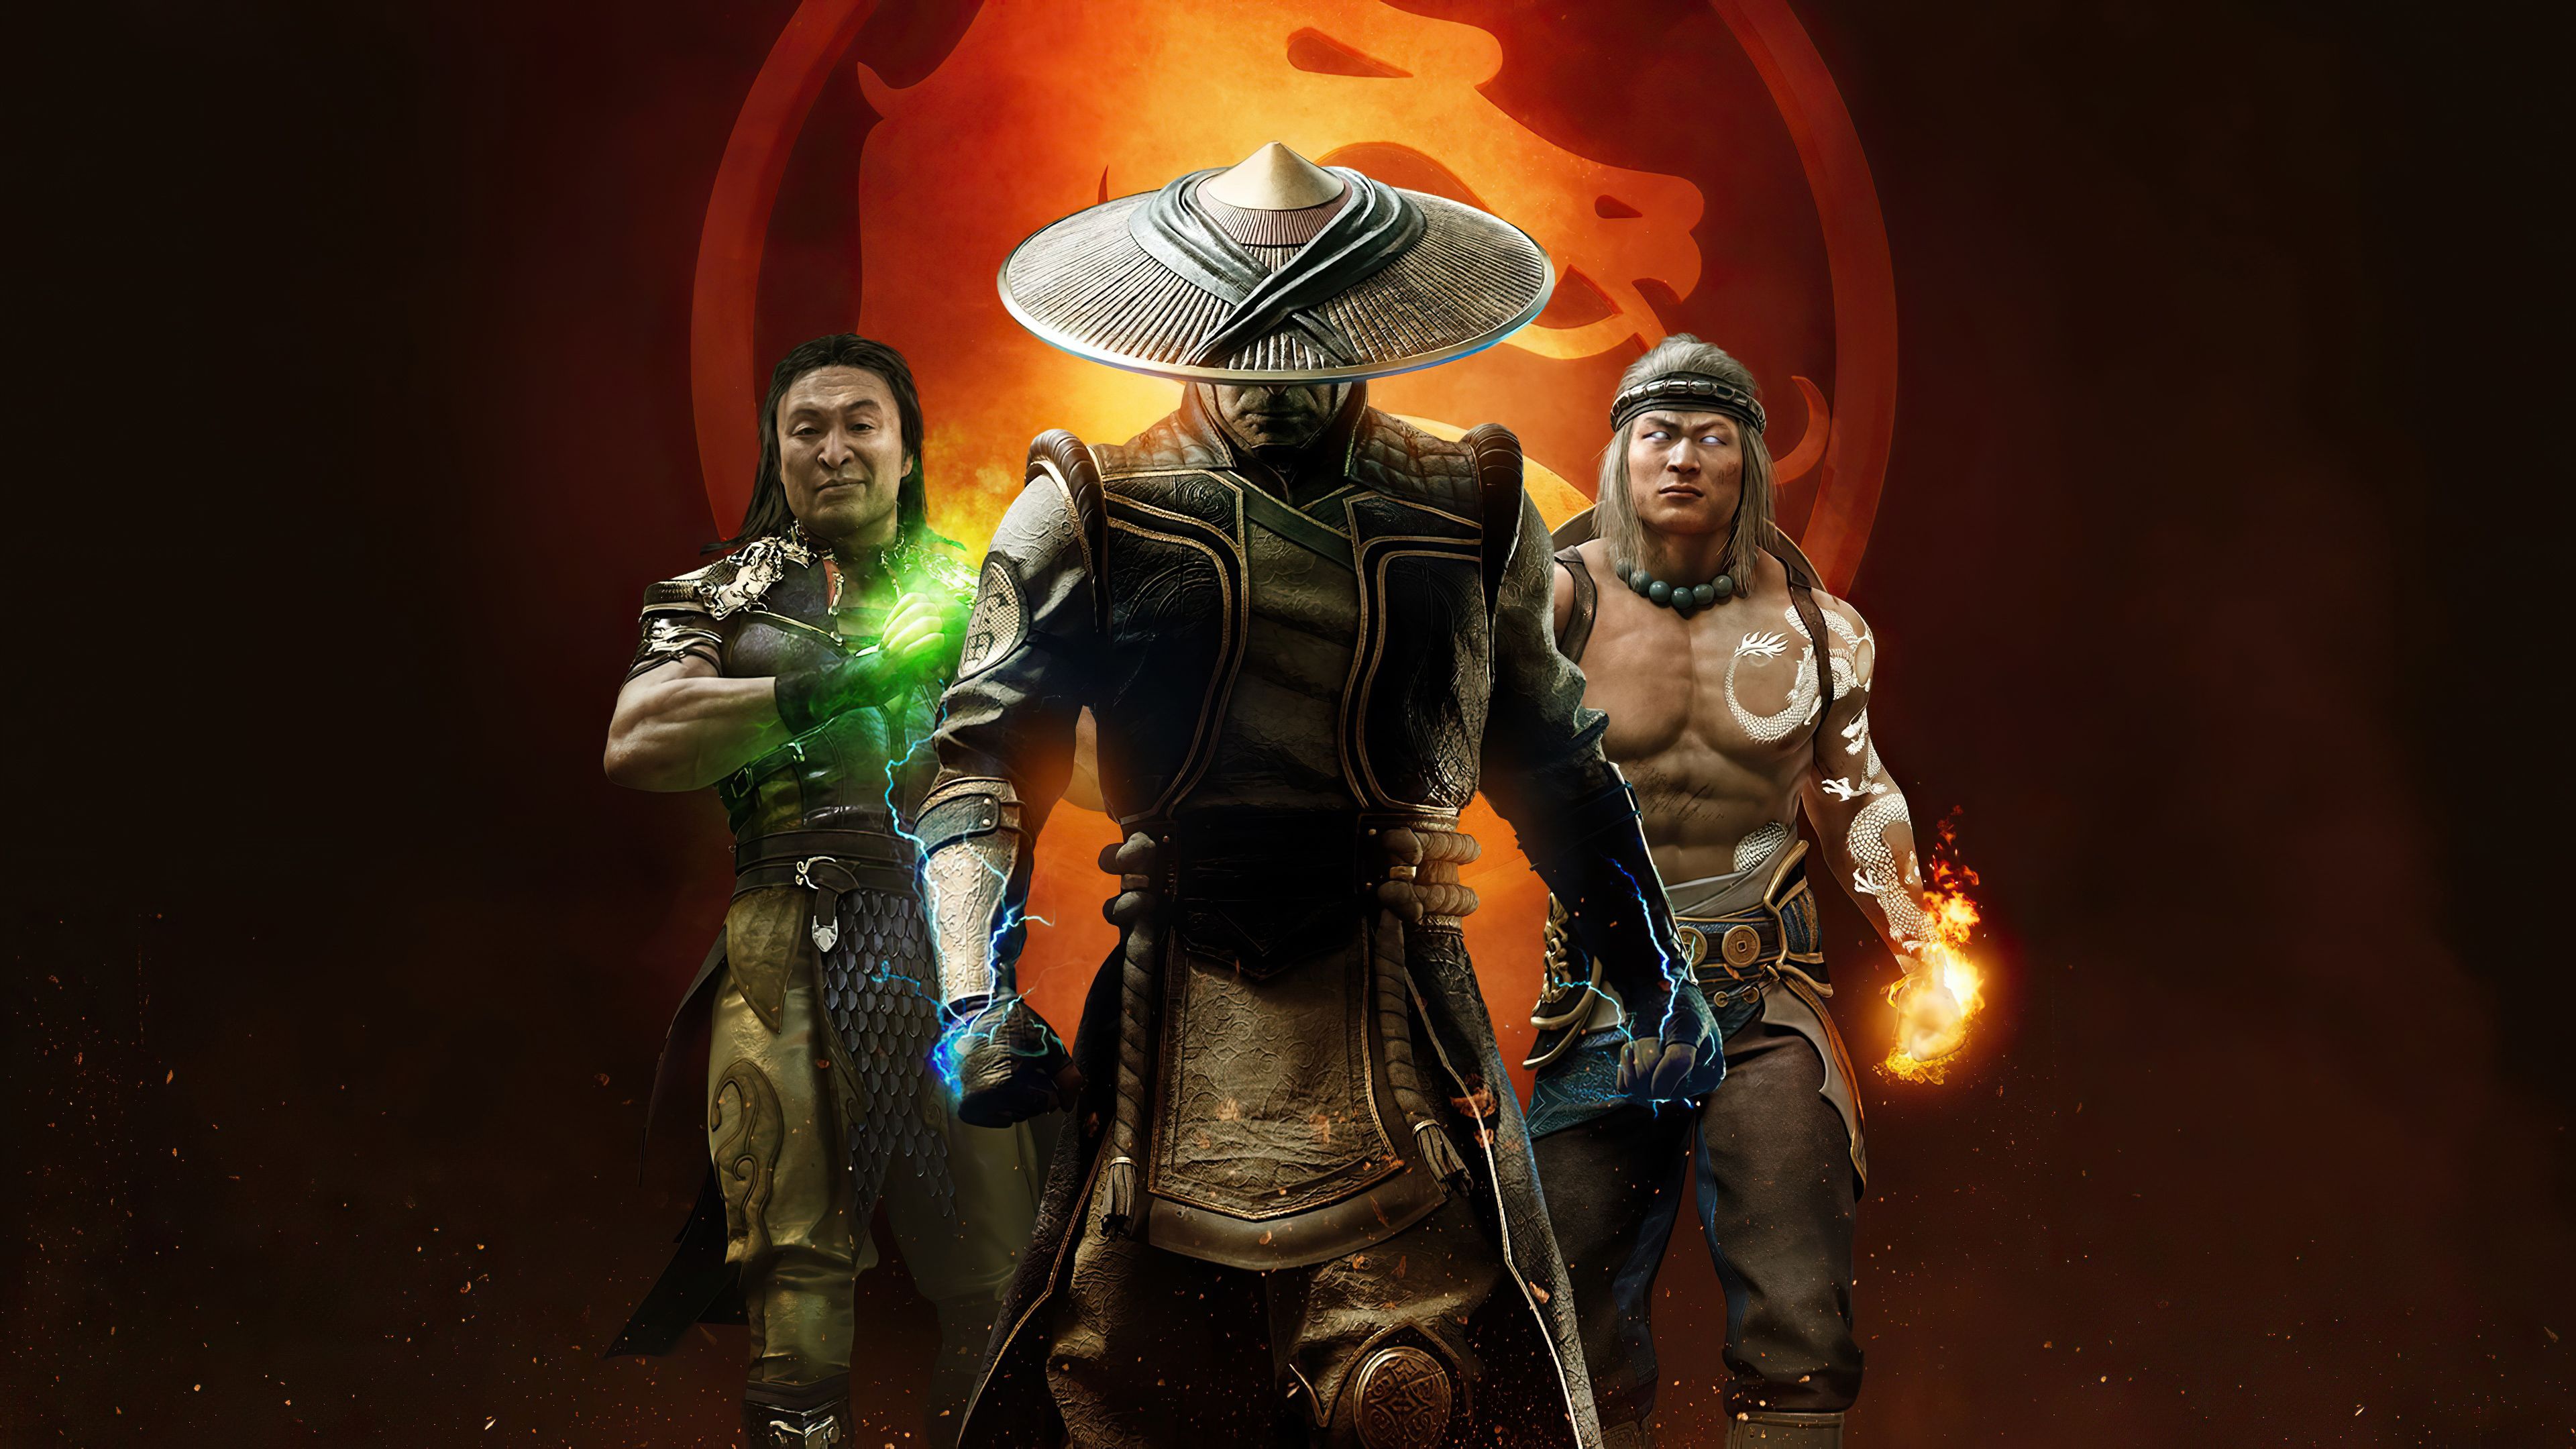 Mortal Kombat 11 Aftermath, HD Games, 4k Wallpaper, Image